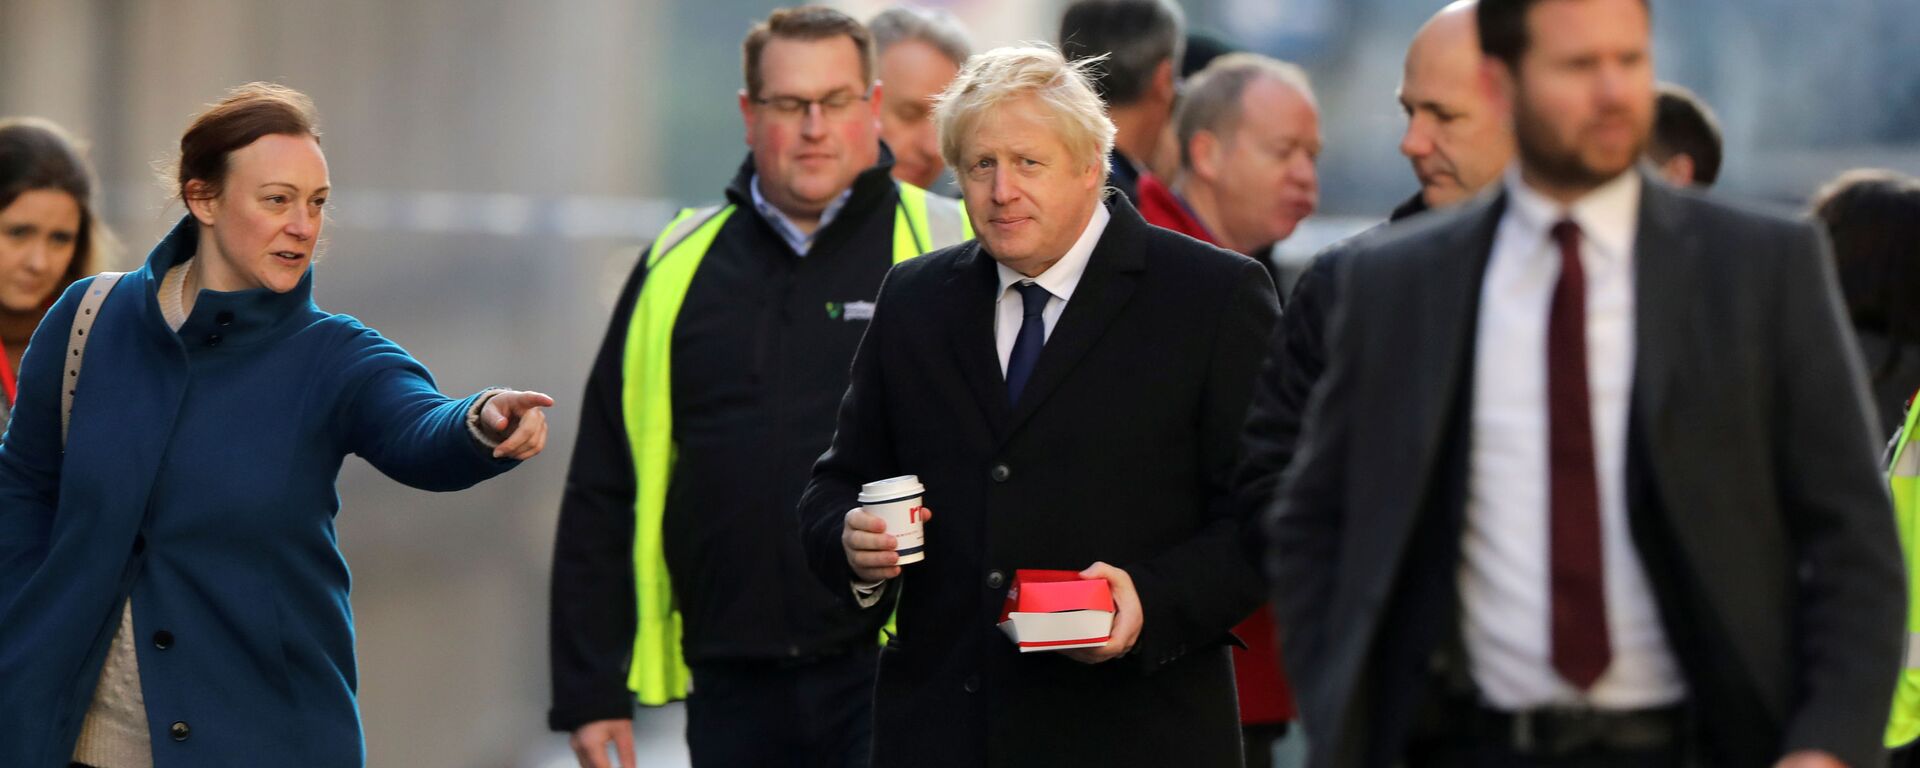 Britain's Prime Minister Boris Johnson Visits the Scene of a Stabbing on London Bridge - Sputnik International, 1920, 30.11.2019